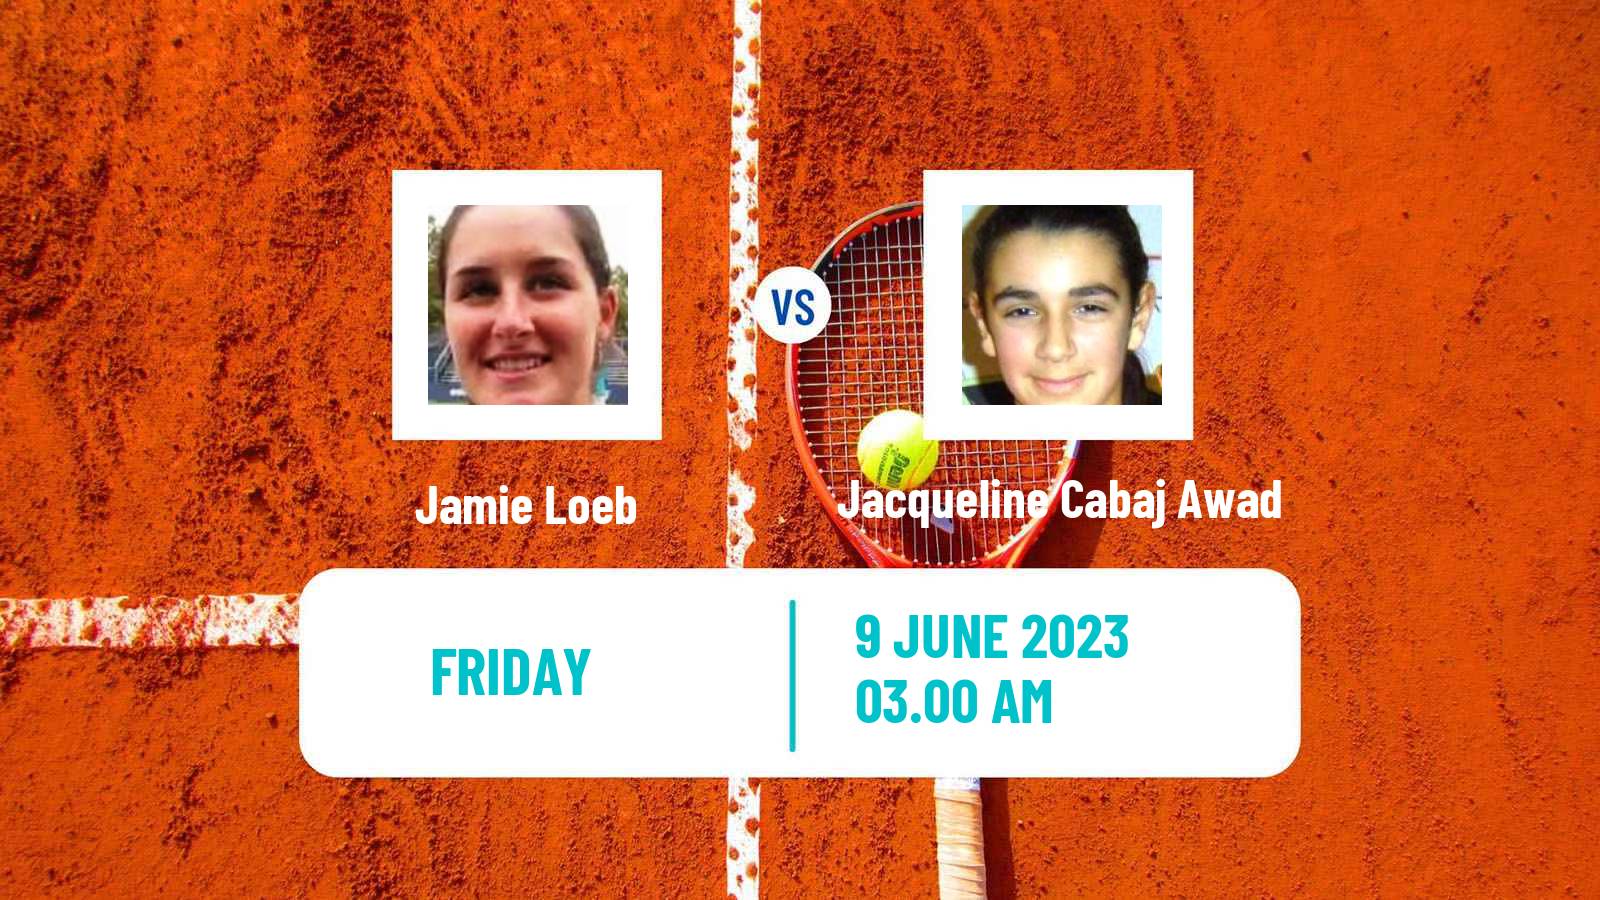 Tennis ITF W25 Madrid Women Jamie Loeb - Jacqueline Cabaj Awad